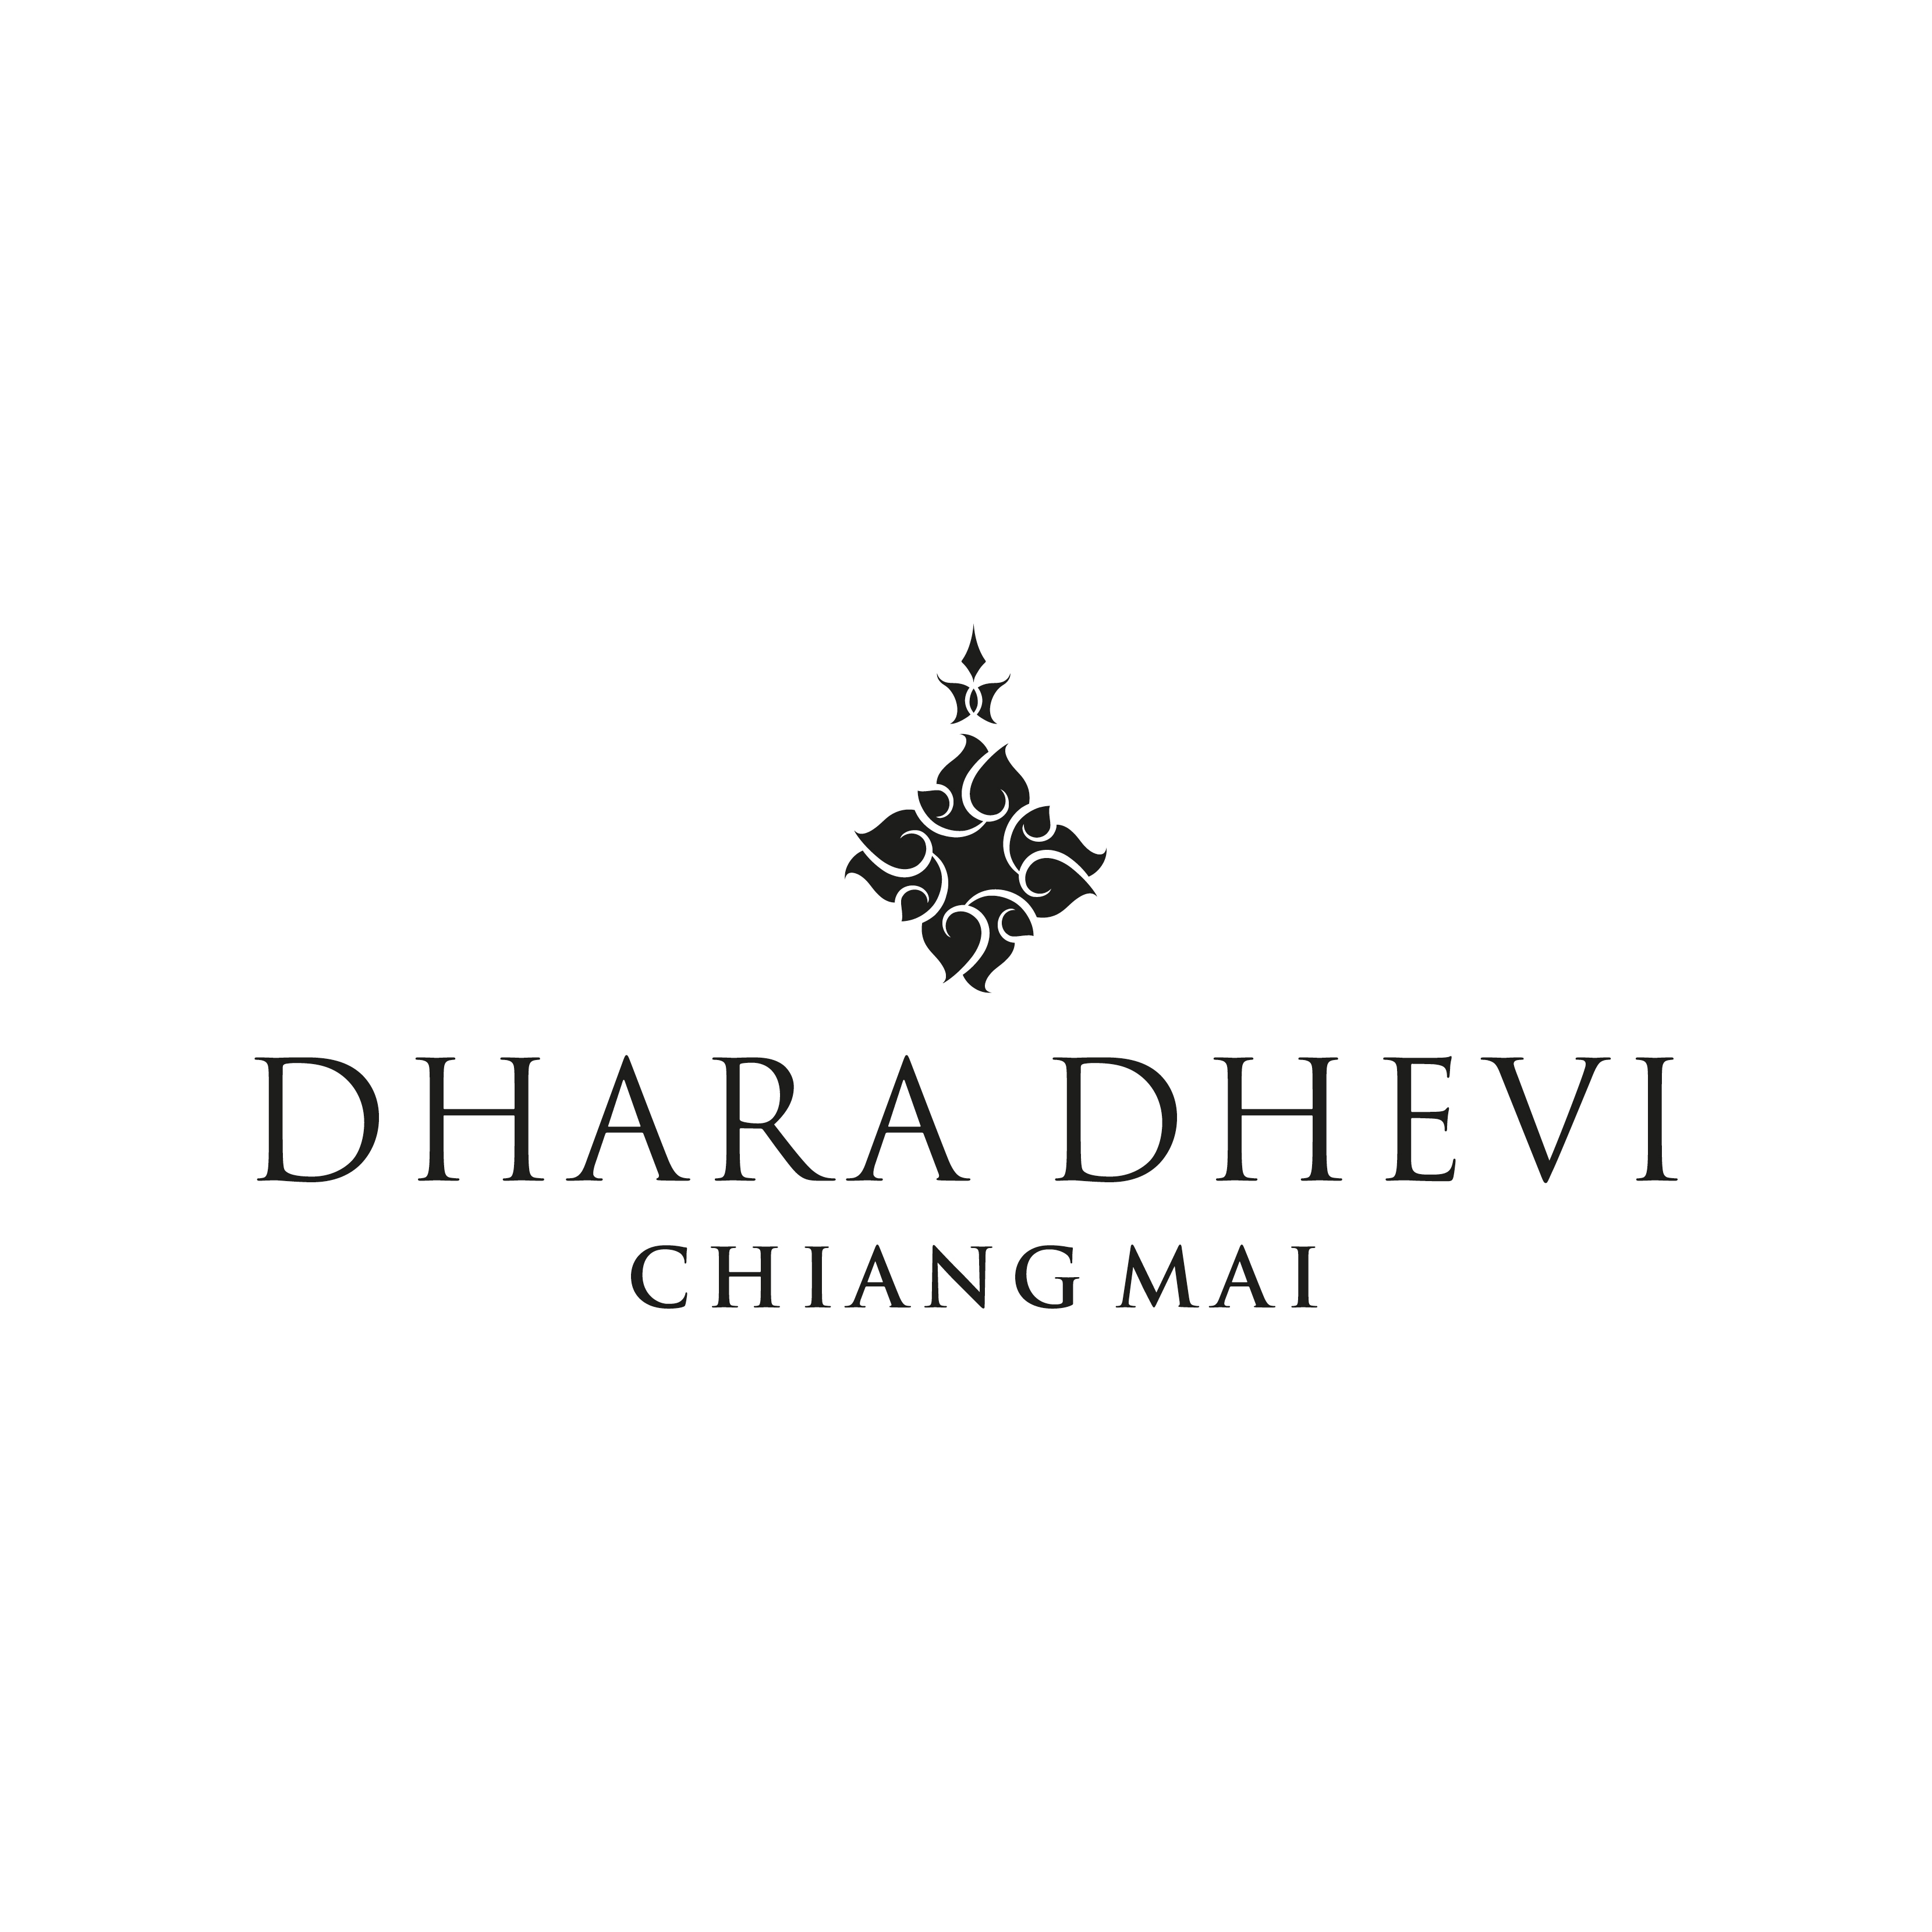 THE DHARA DHEVI CHIANG MAI